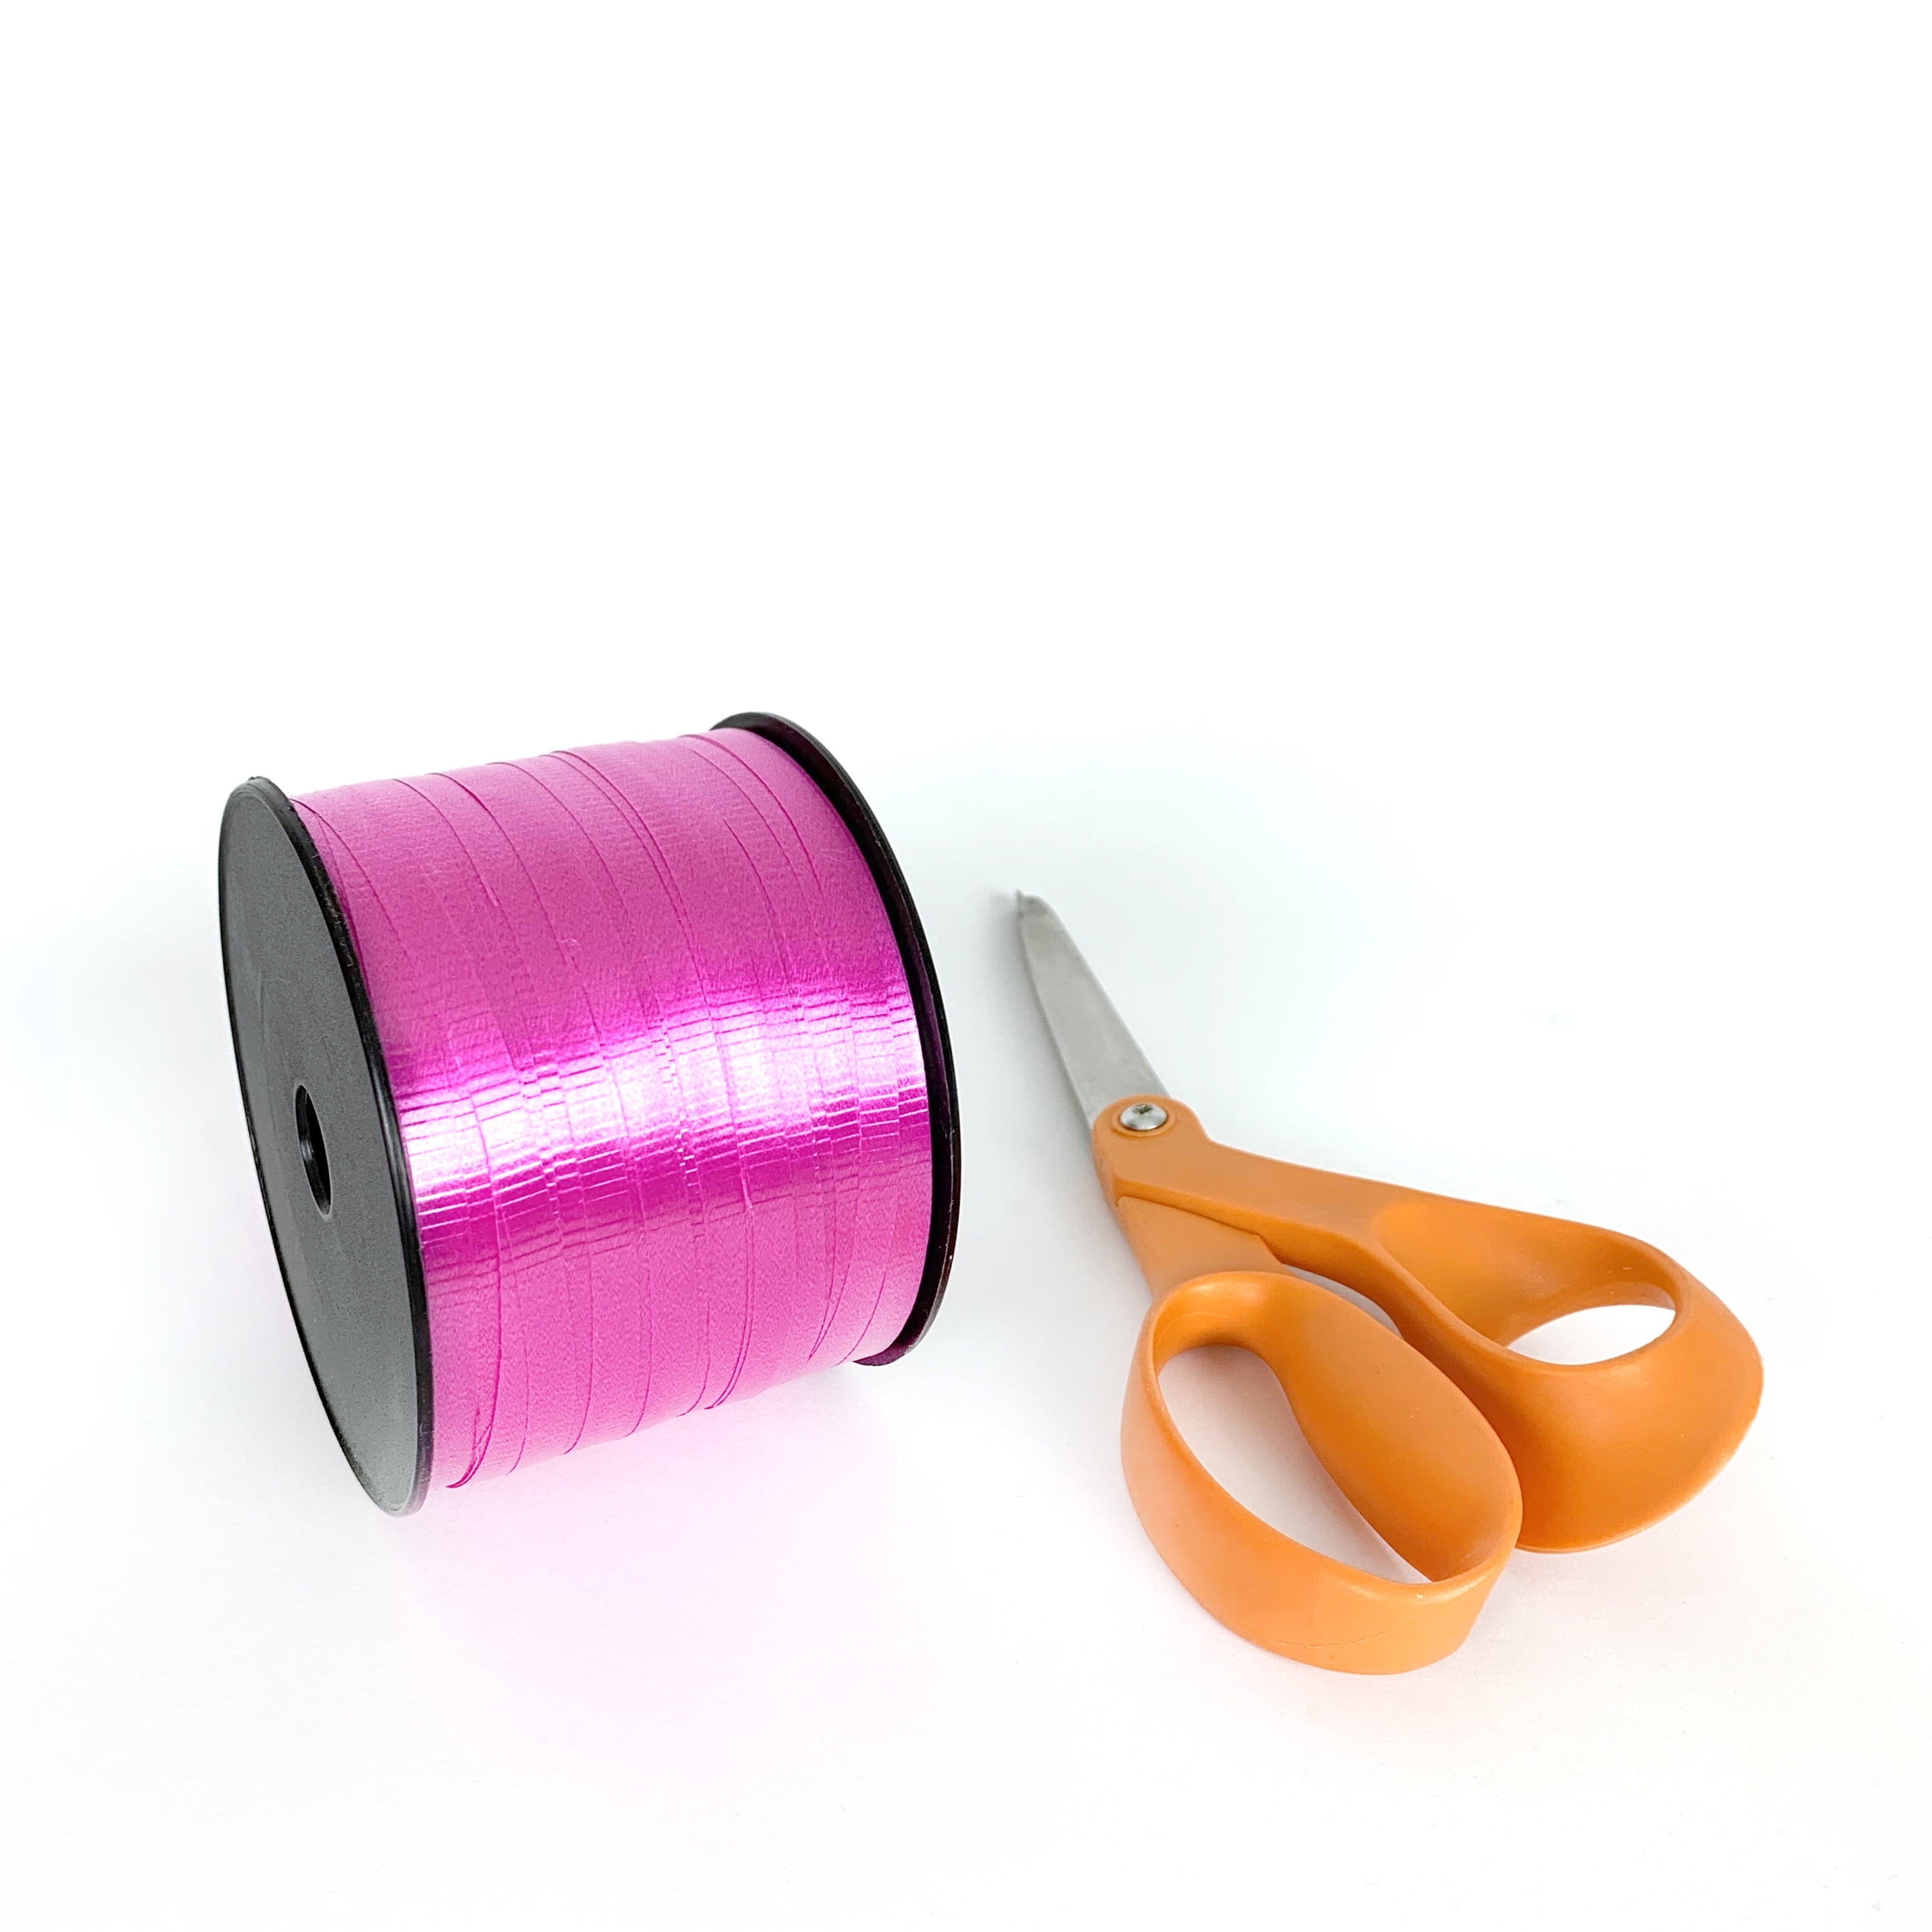 3/8 Pastel Pink Curling Ribbon 250yds MF20264 - Balloon Supply